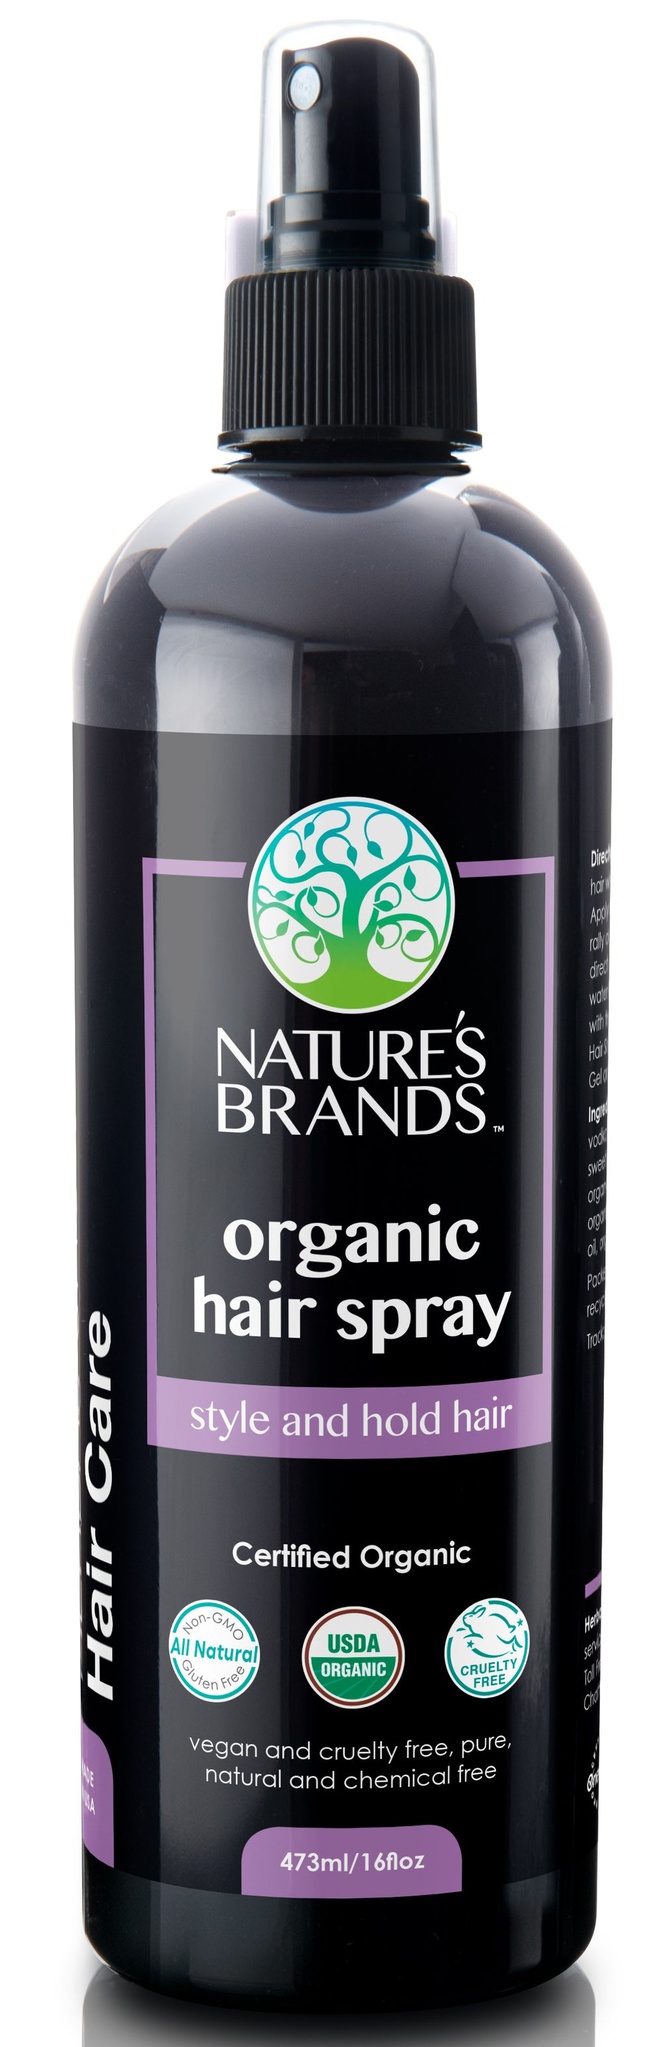 Nature's Brands Organic Hair Spray